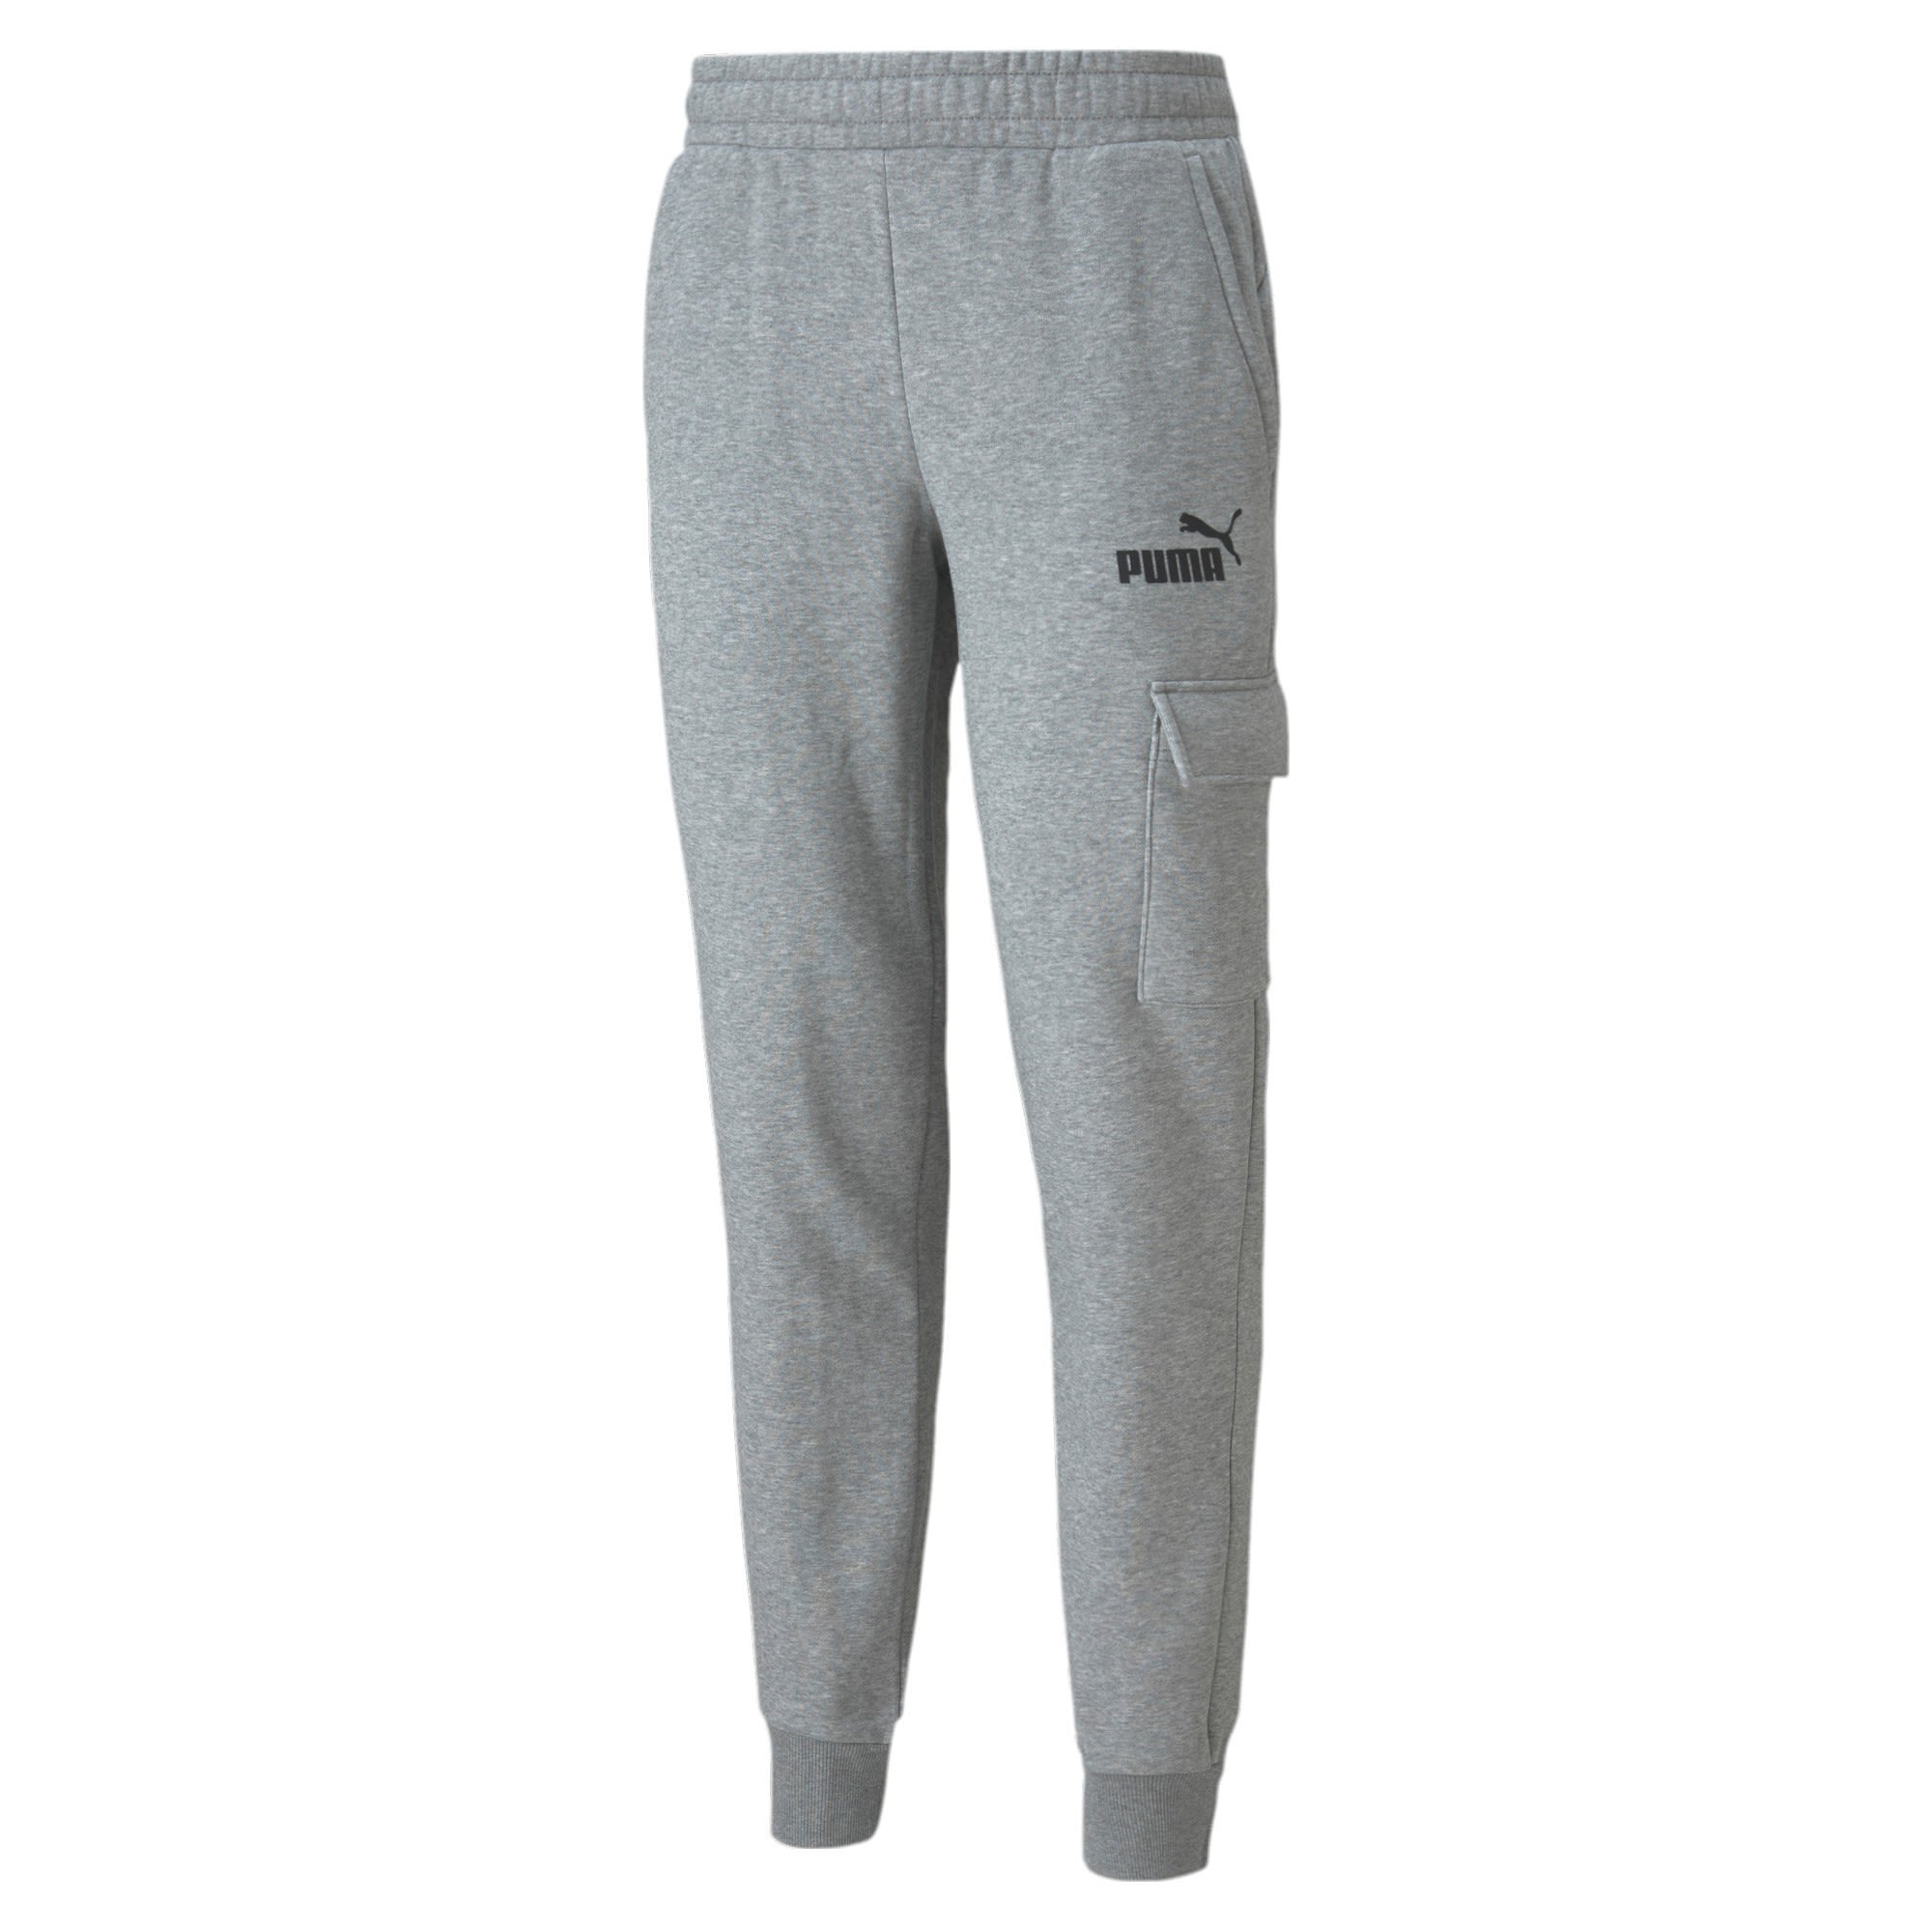 Puma Essentials Cargo Pants Grau- Male Lange Hosen- Grsse S - Farbe Medium Gray Heather unter Puma